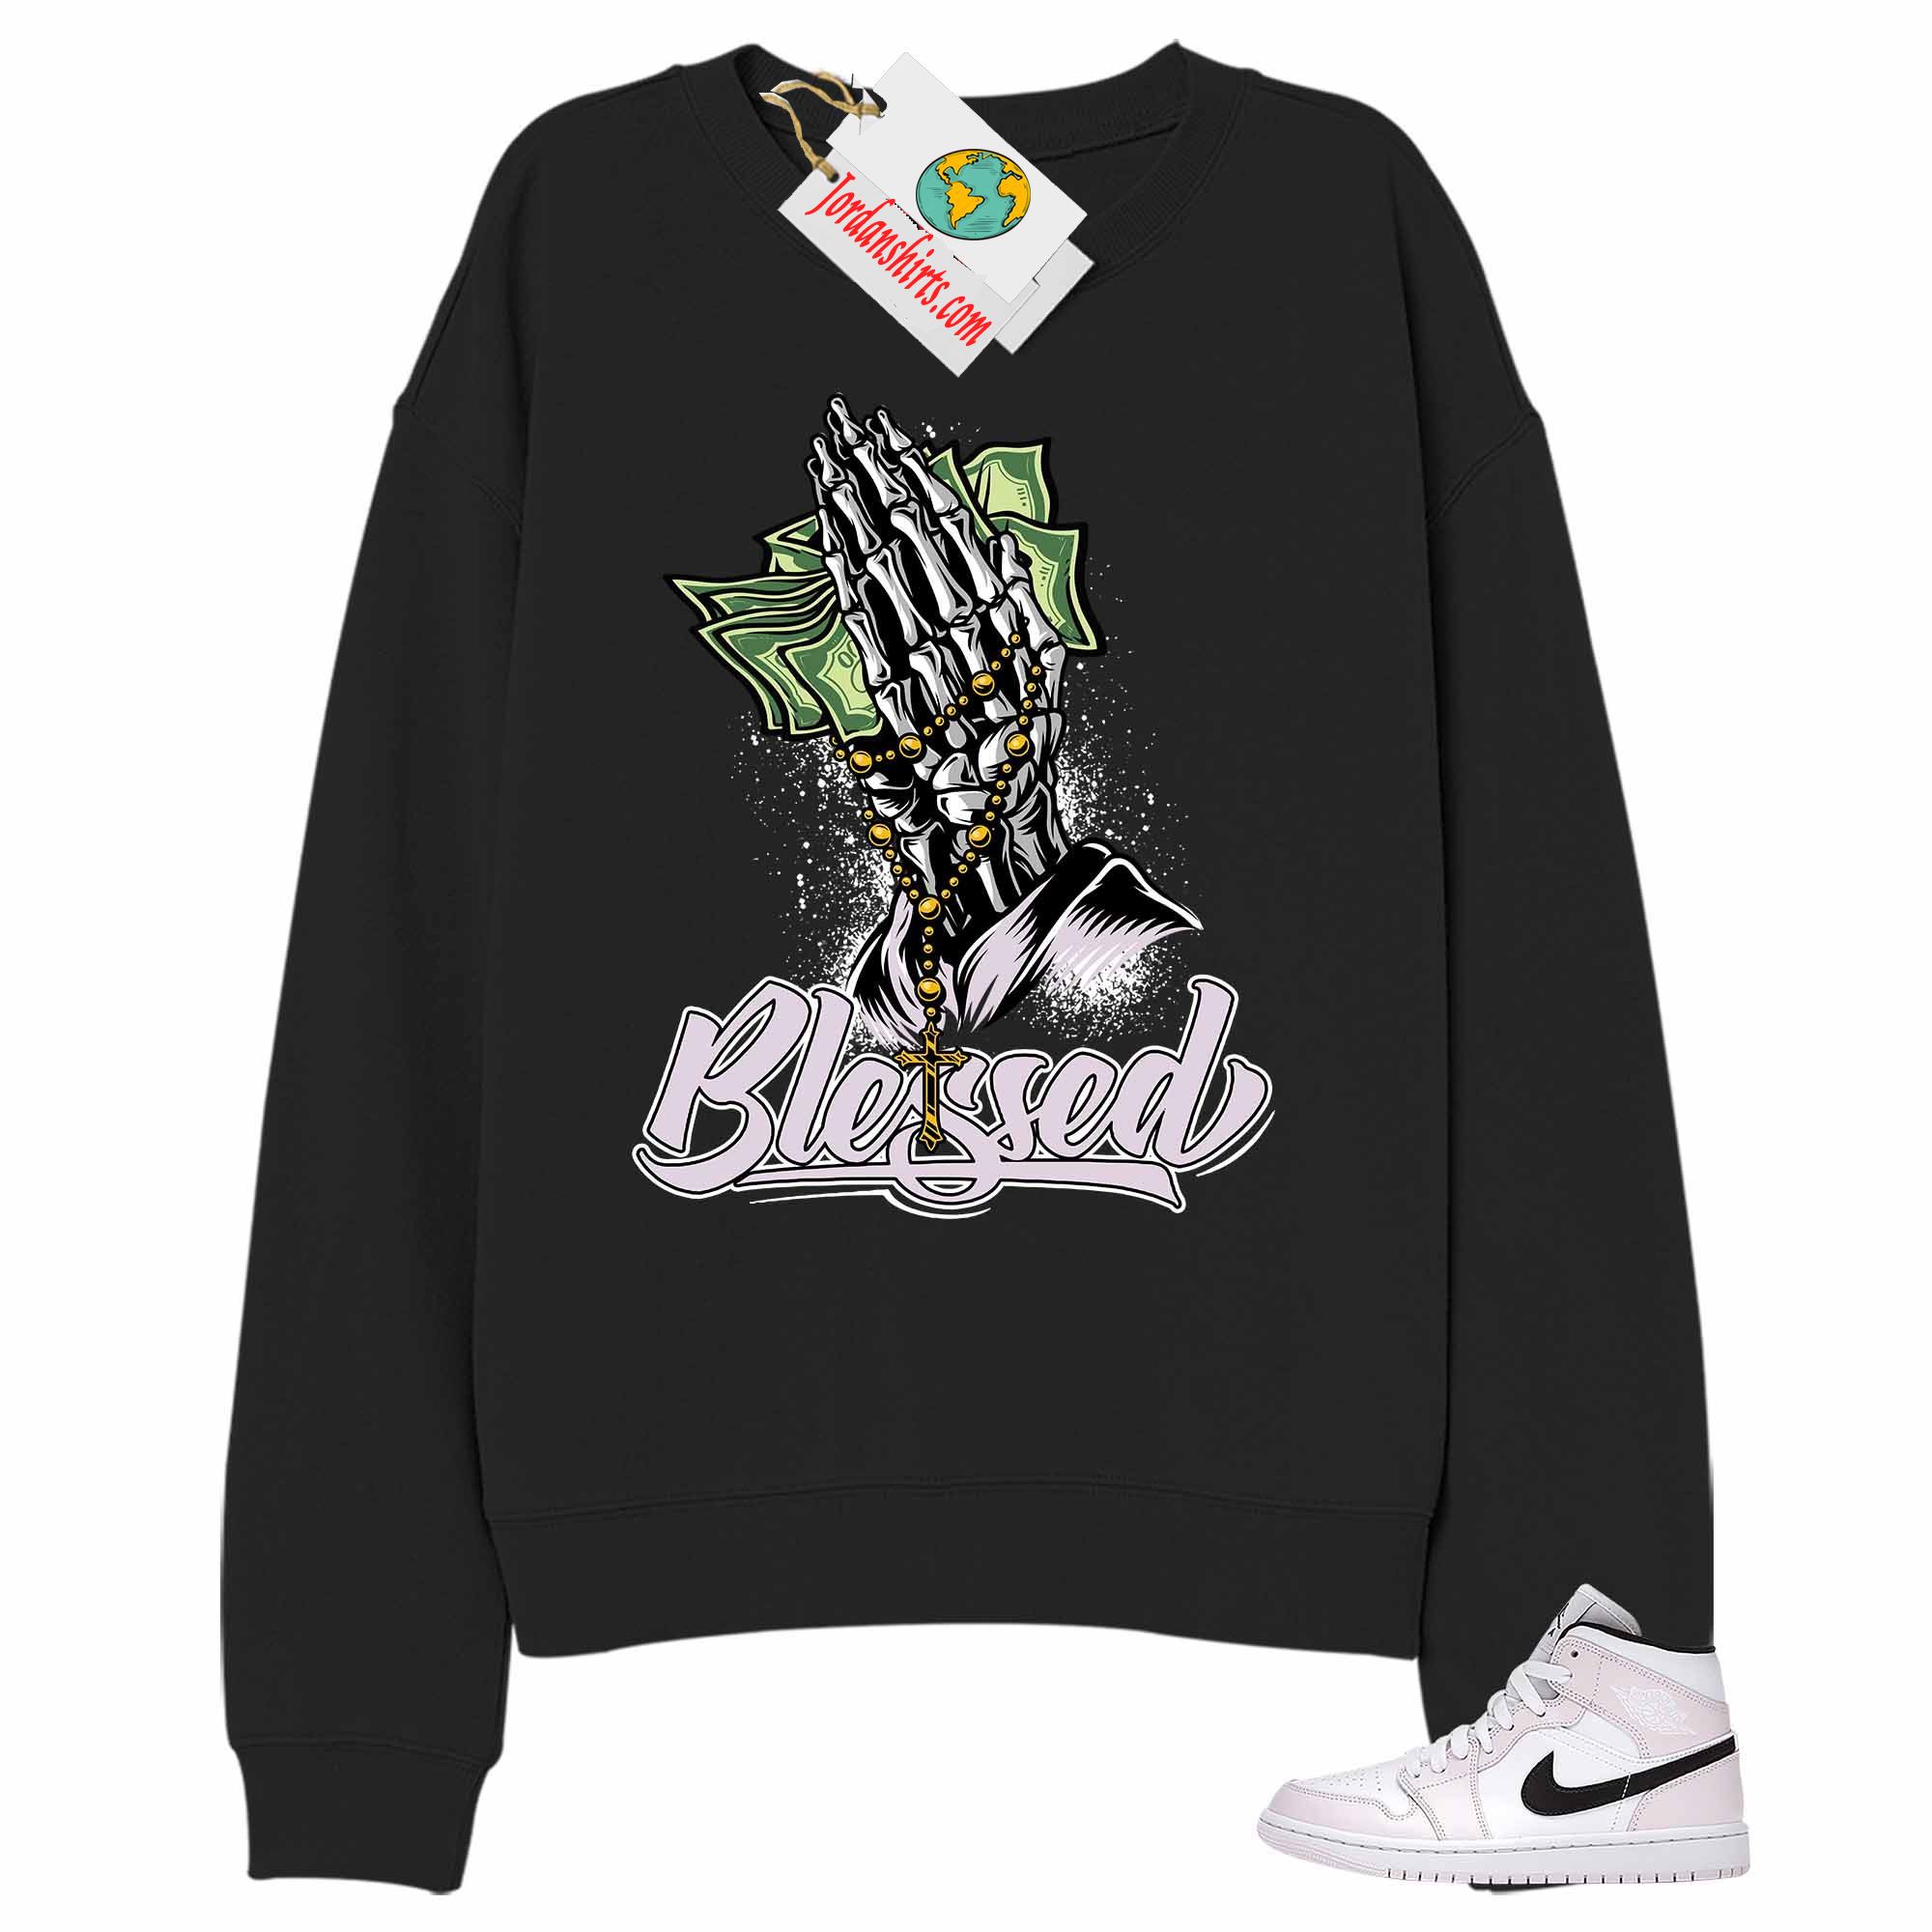 Jordan 1 Sweatshirt, Blessed Pray Hand Money Black Sweatshirt Air Jordan 1 Barely Rose 1s Plus Size Up To 5xl